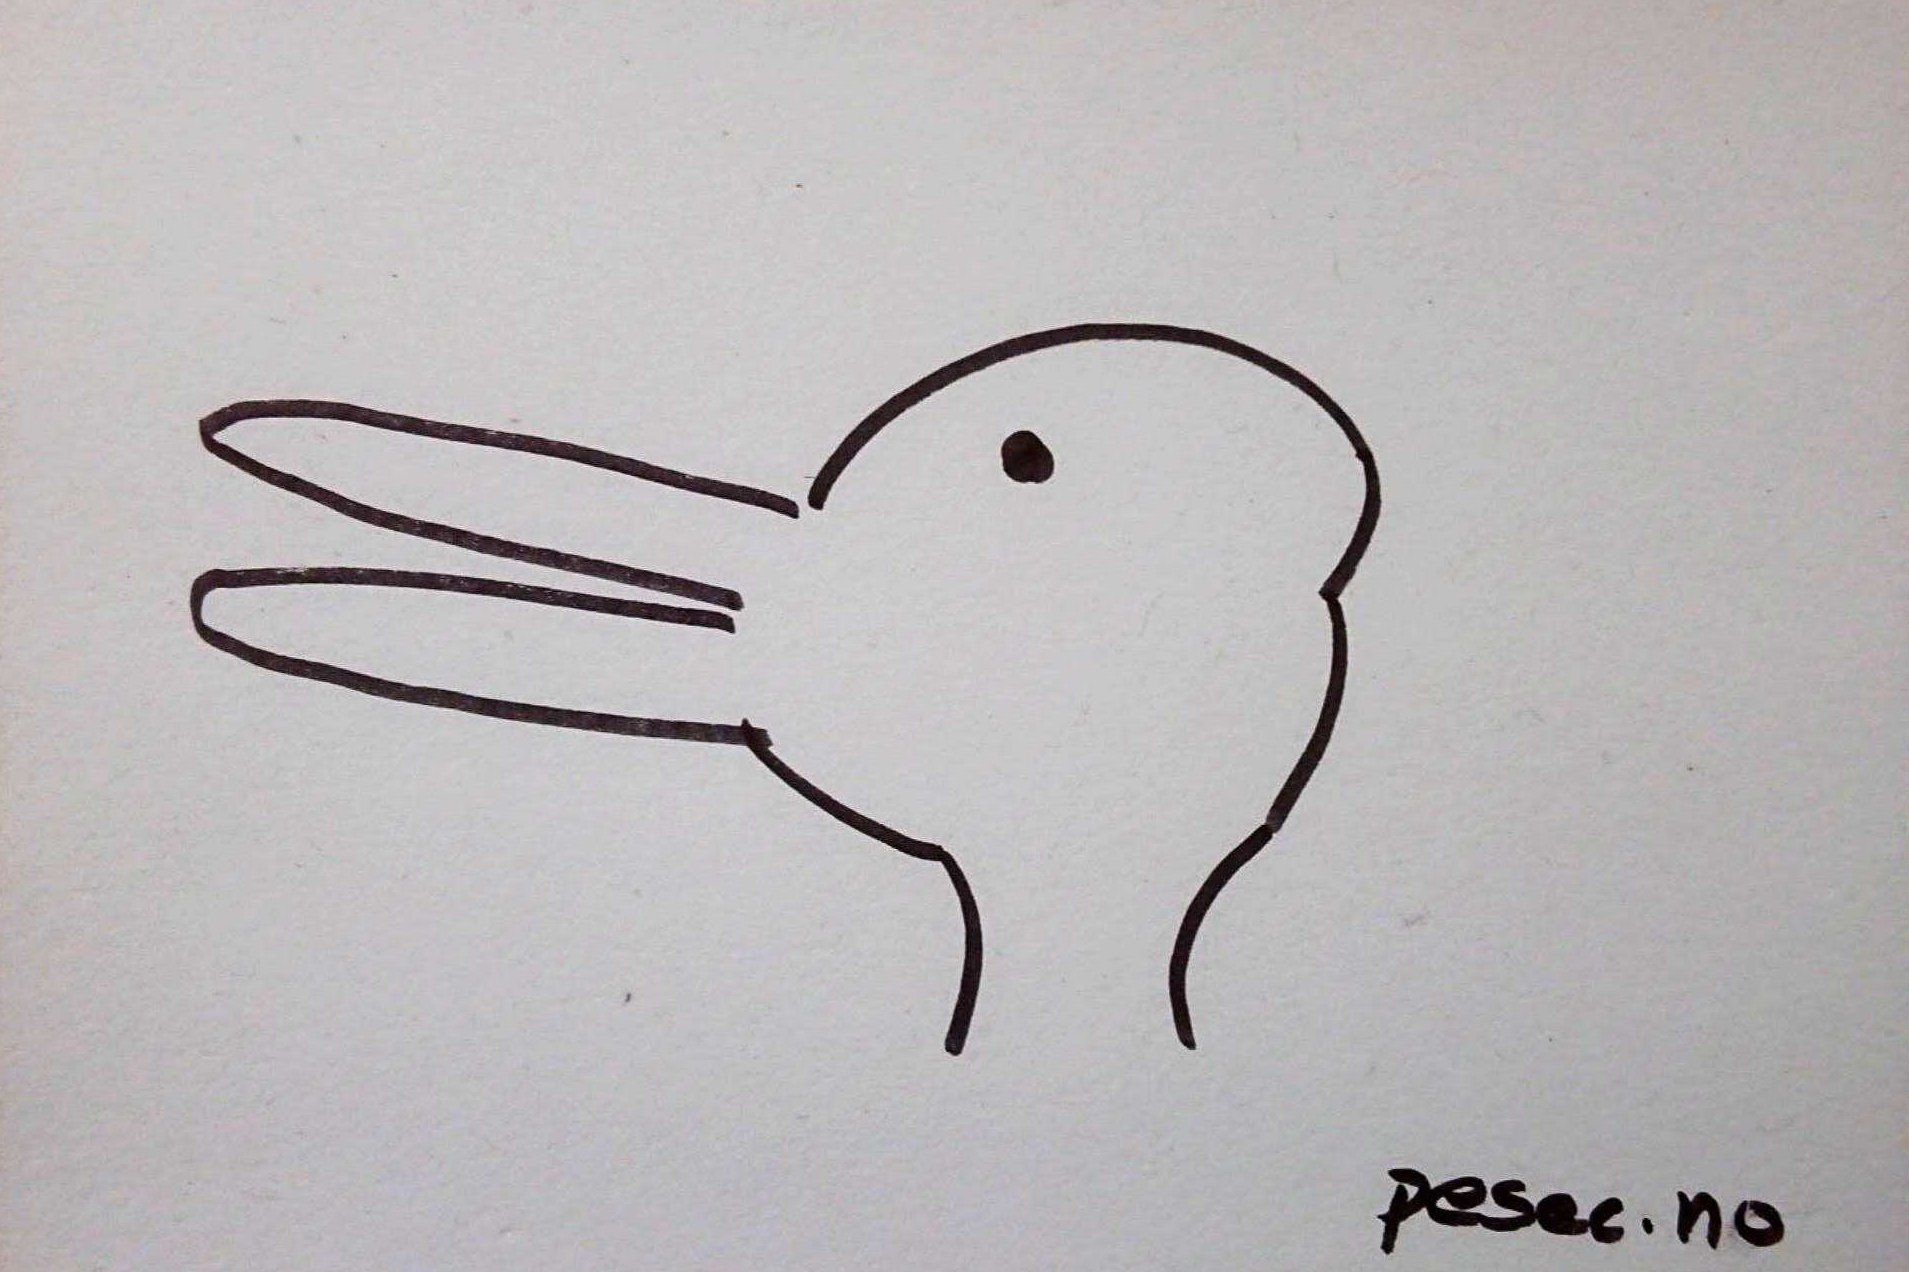 Duck-rabbit illustration.